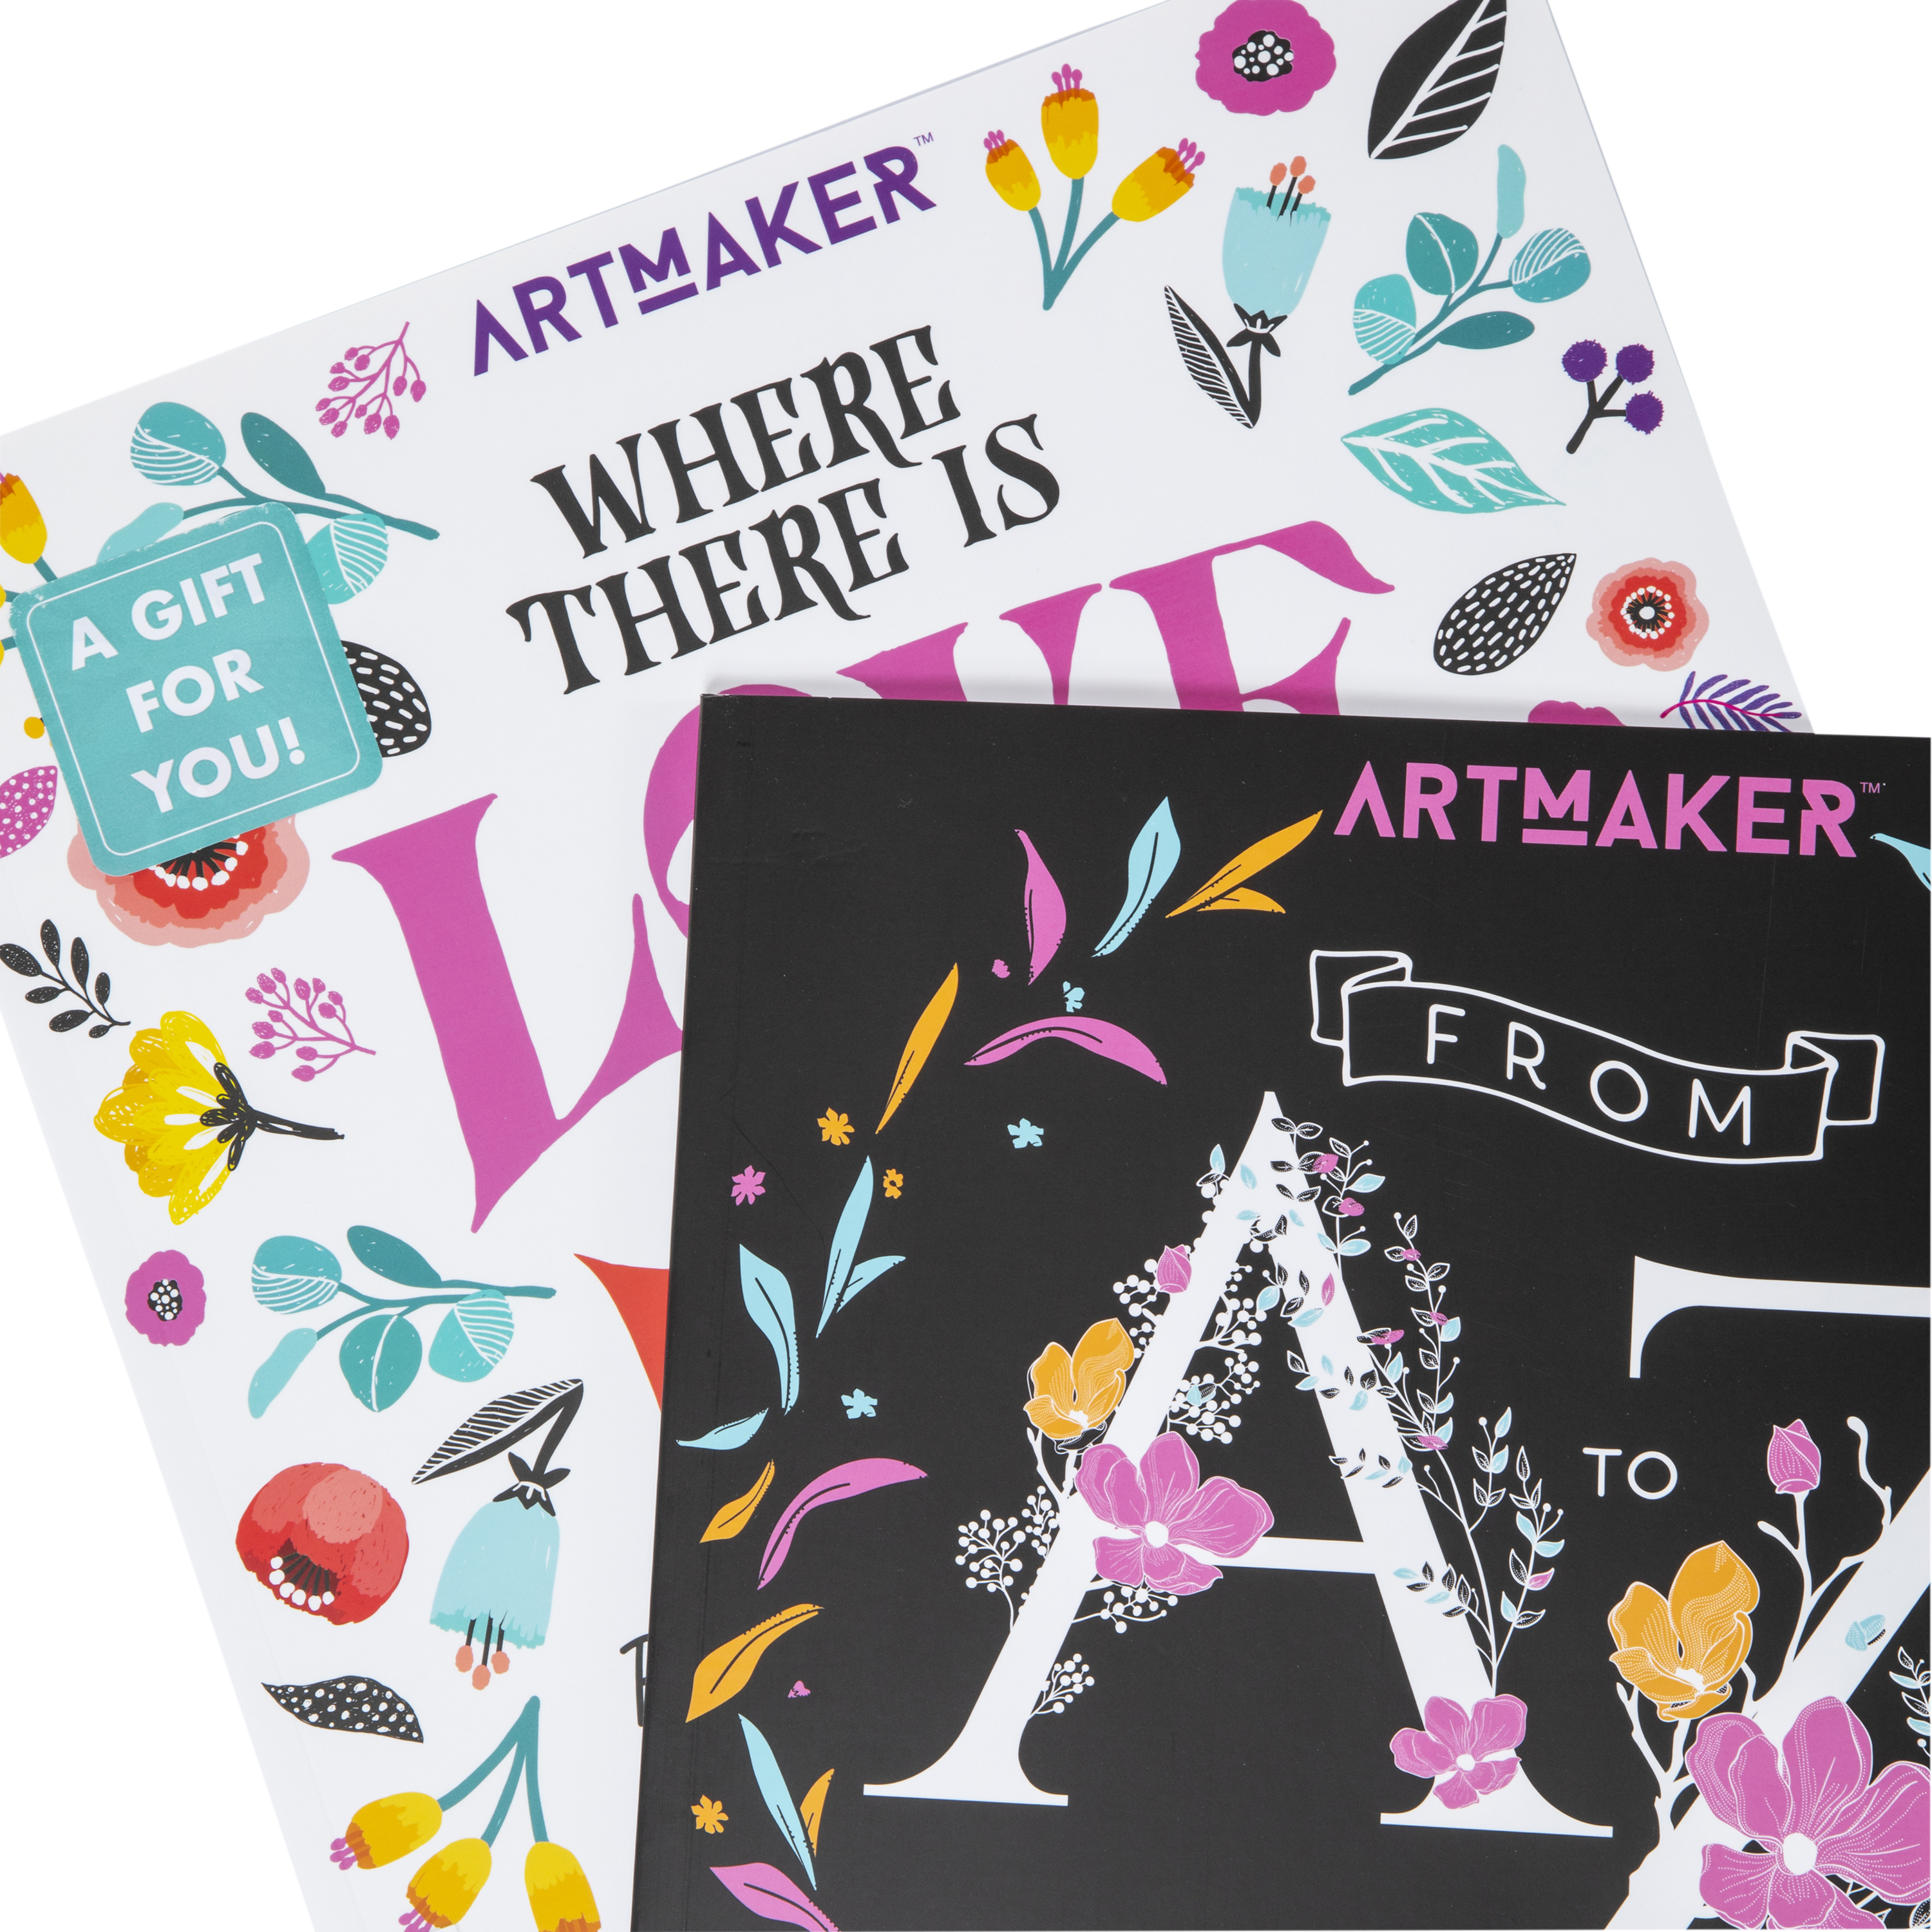 artmaker™ positive affirmations adult coloring book set